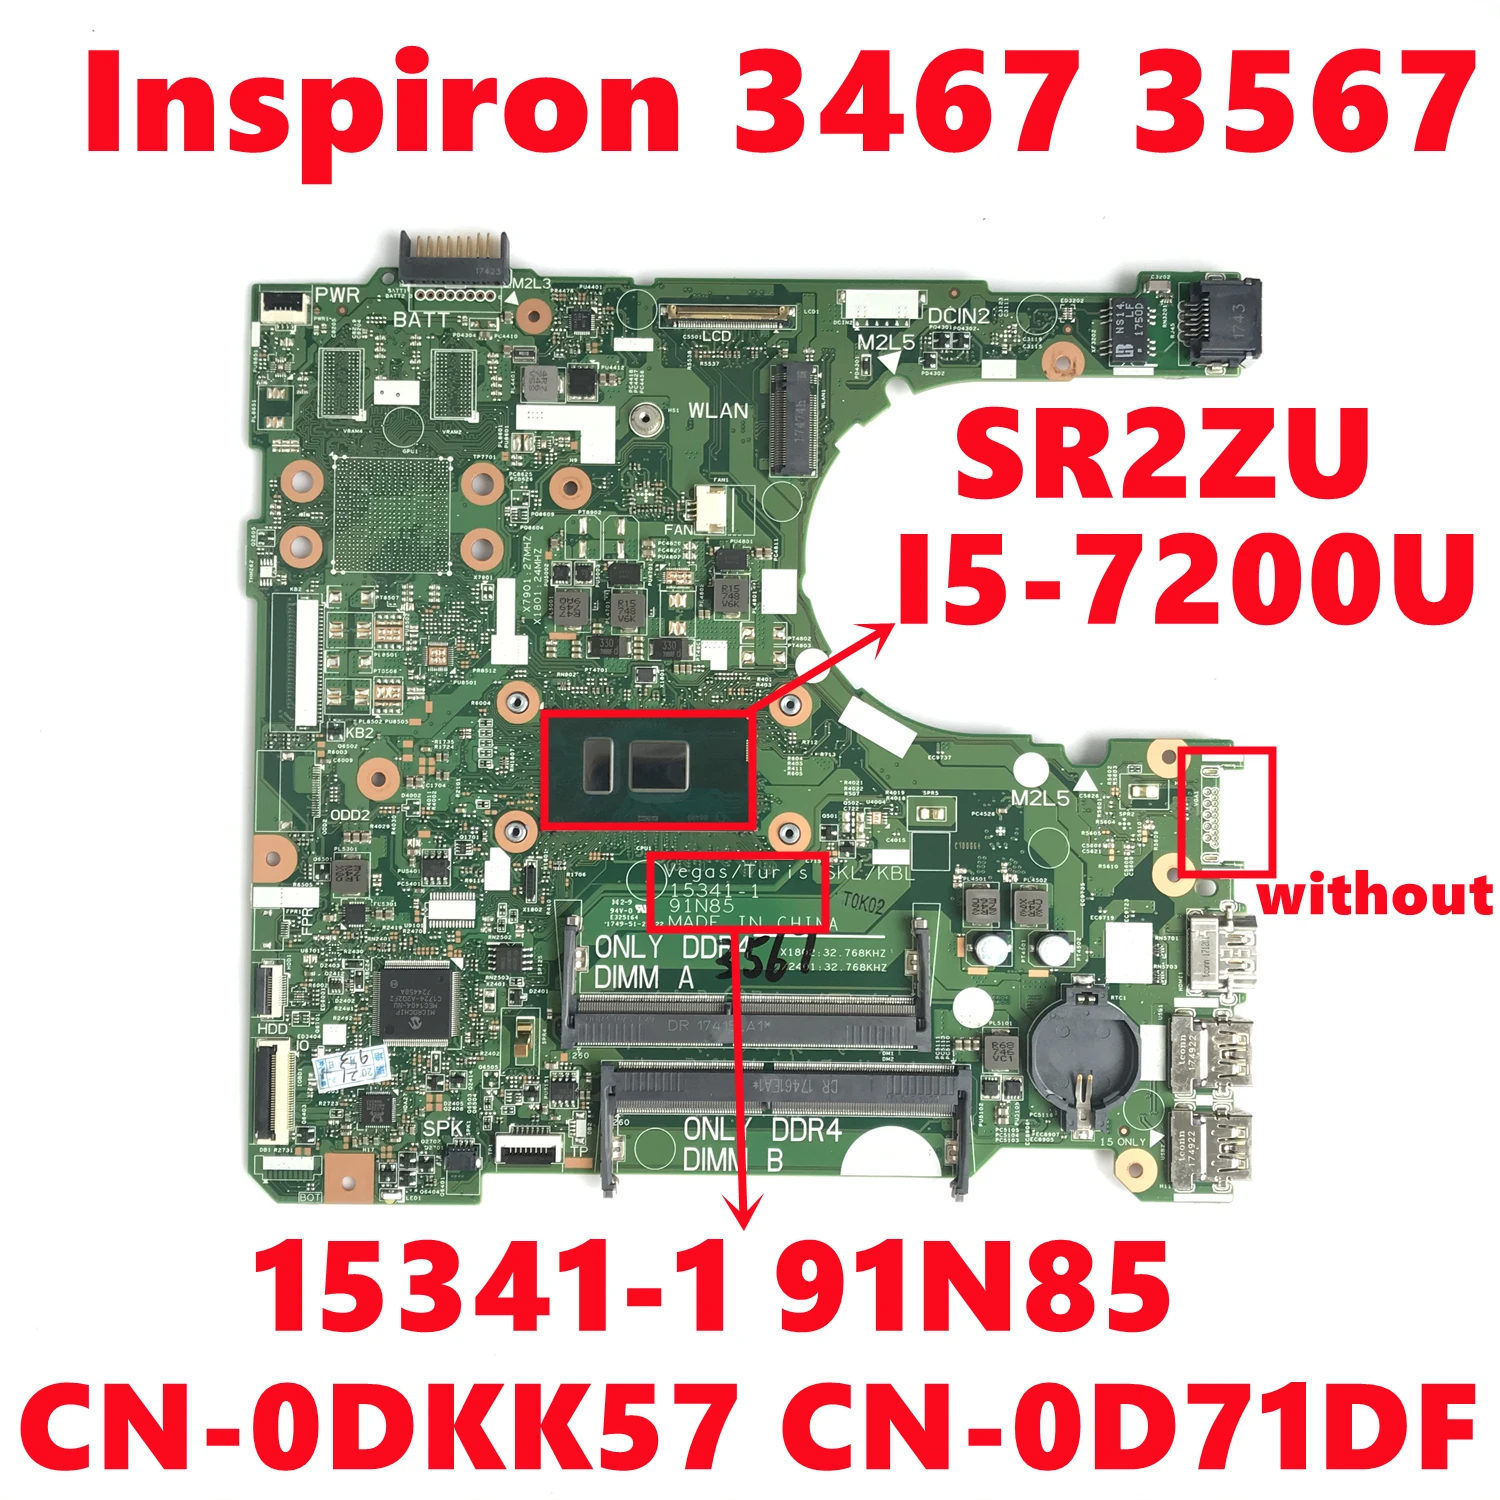 

CN-0DKK57 DKK57 CN-0D71DF D71DF For dell Inspiron 3467 3567 Laptop Motherboard 15341-1 91N85 With I5-7200U DDR4 100%Test Working